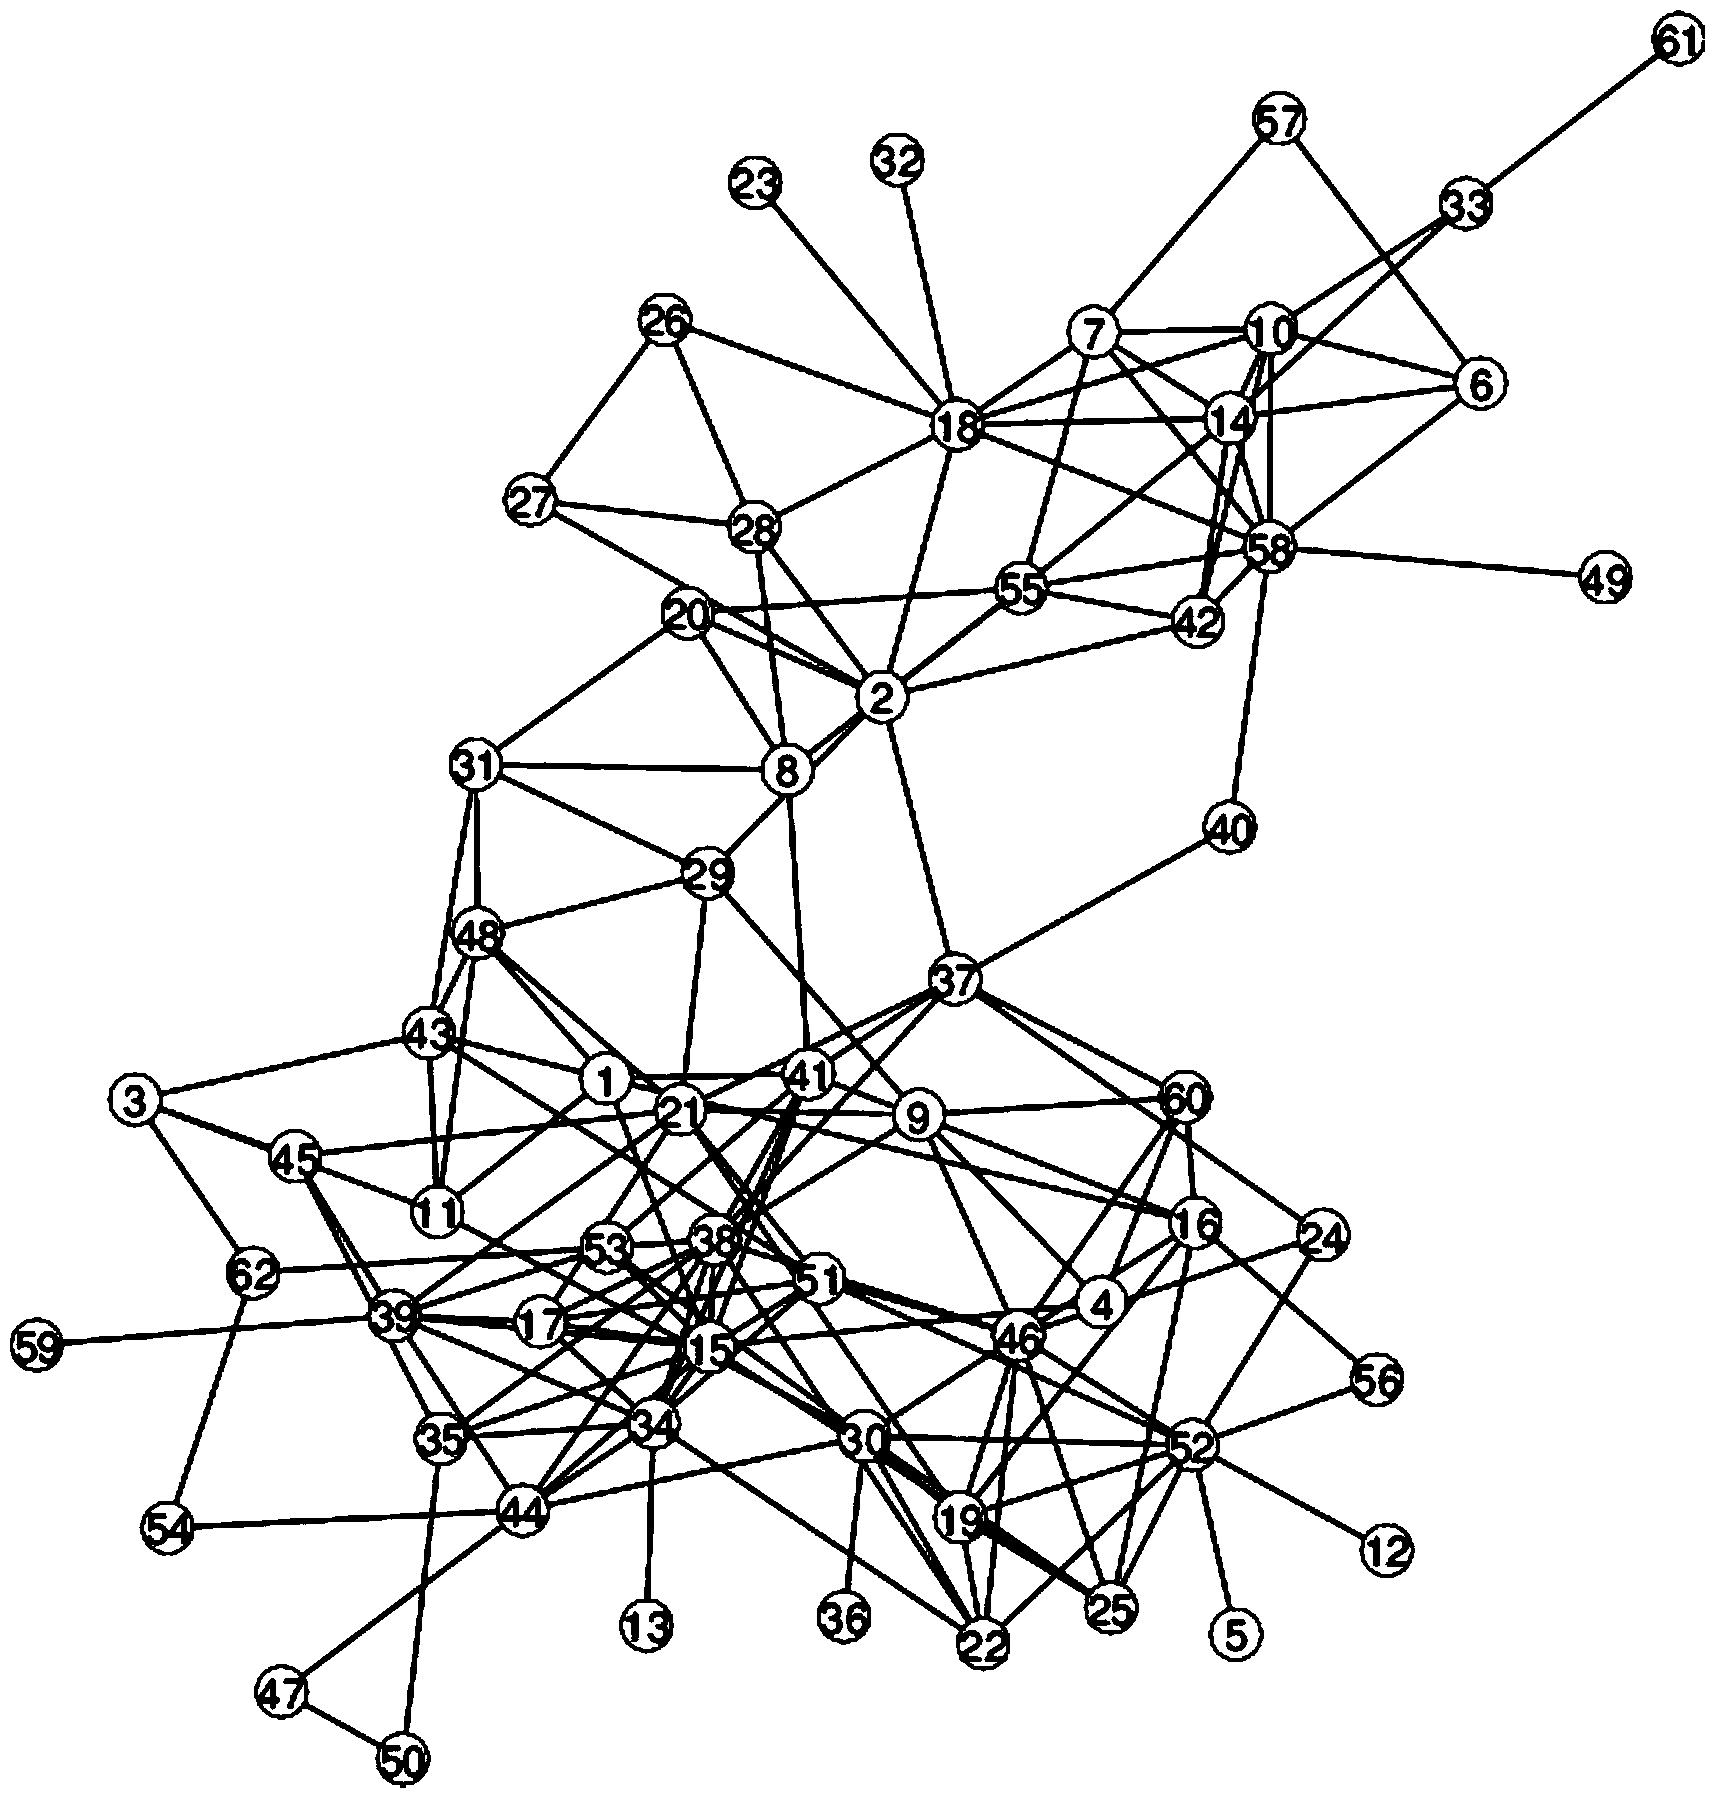 Network community detection method based on M elite coevolution strategy